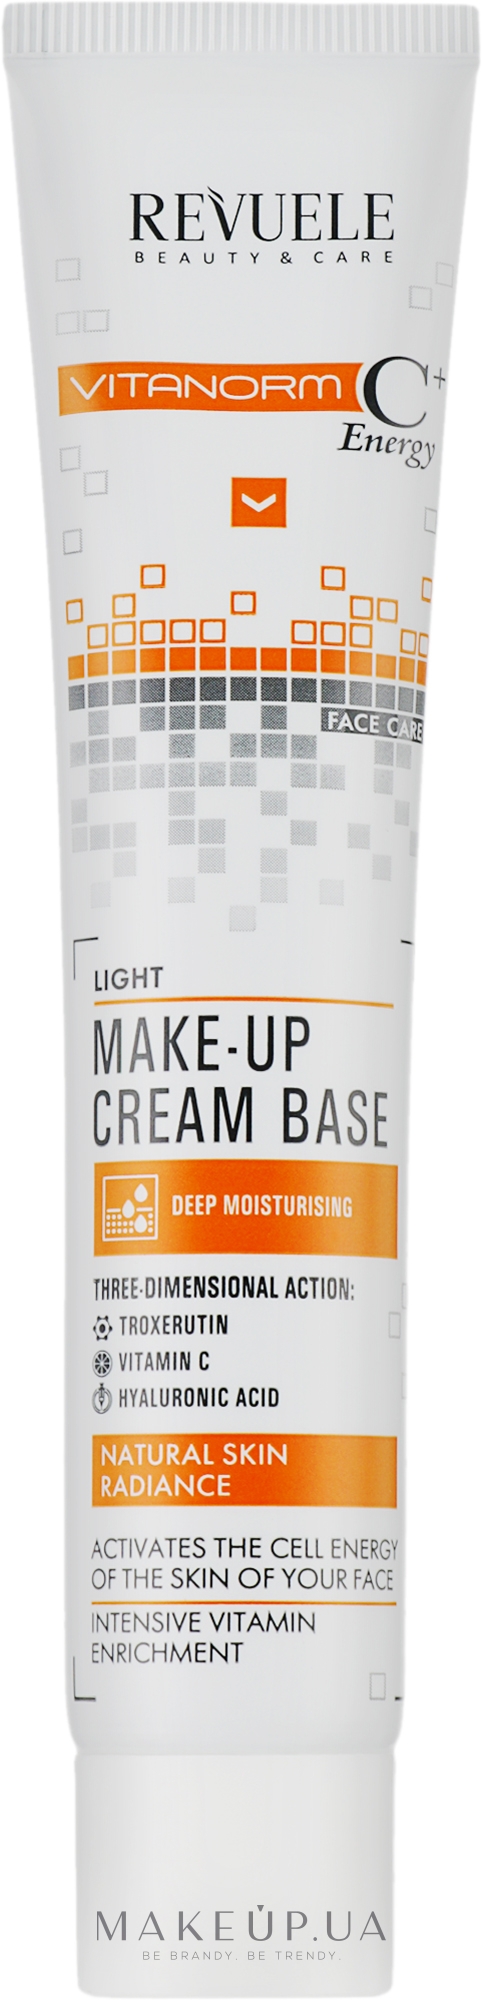 Крем-база під макіяж - Revuele Vitanorm C+ Make-up Cream Base - Light — фото 50ml